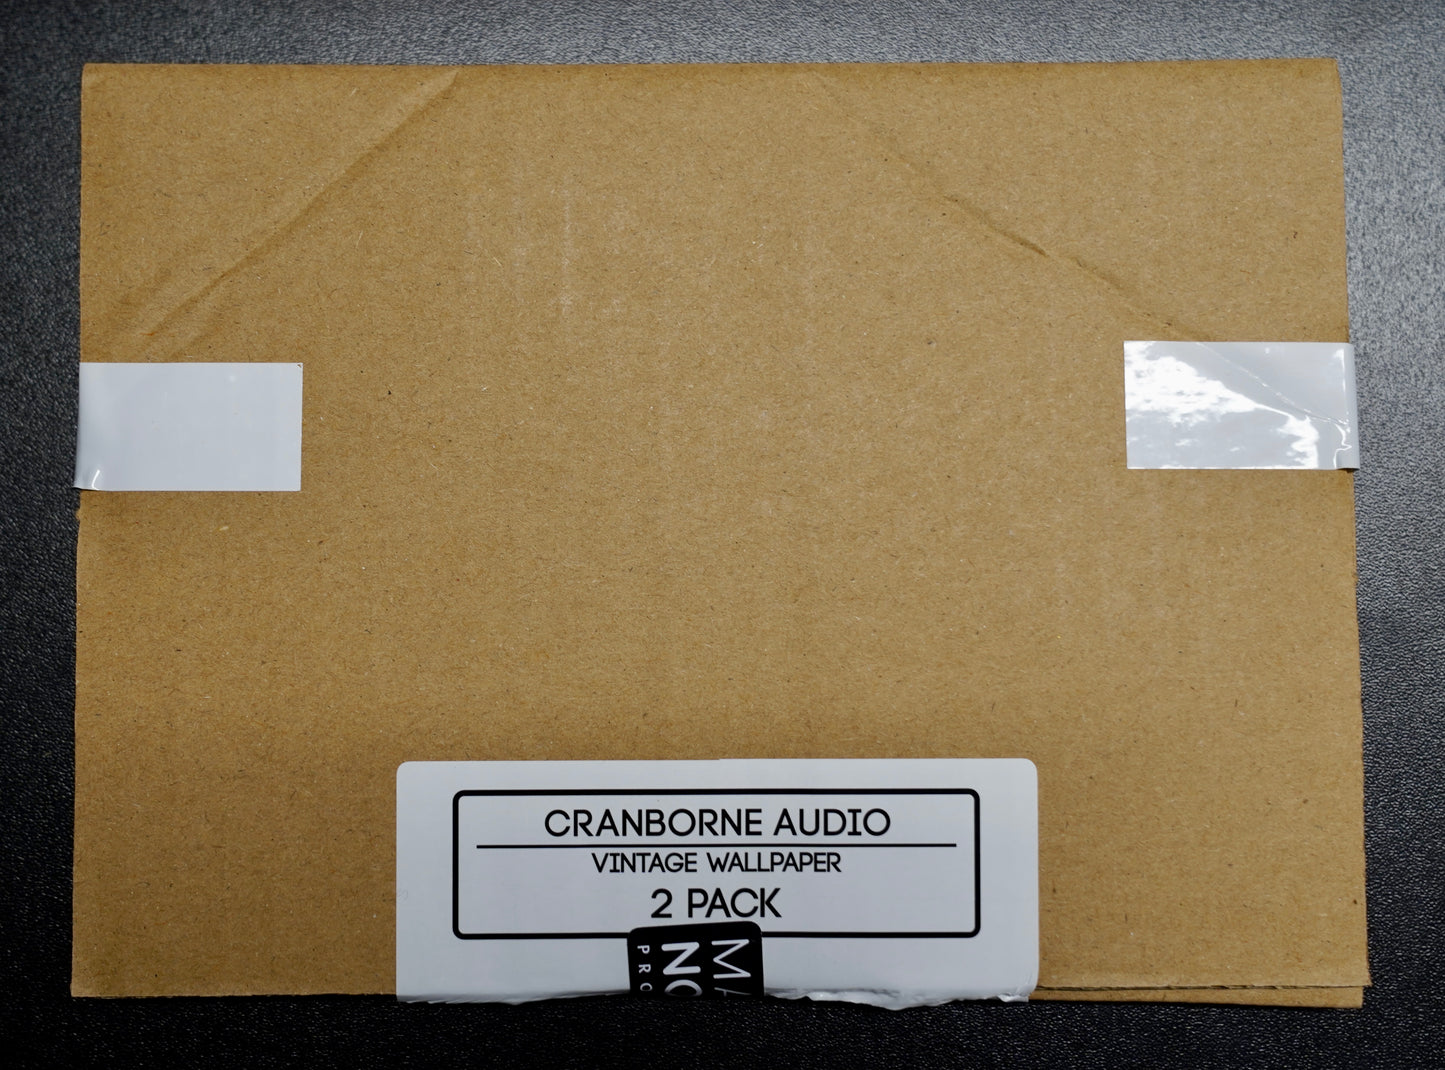 Cranborne Audio Vintage Wallpaper (2 Pack)